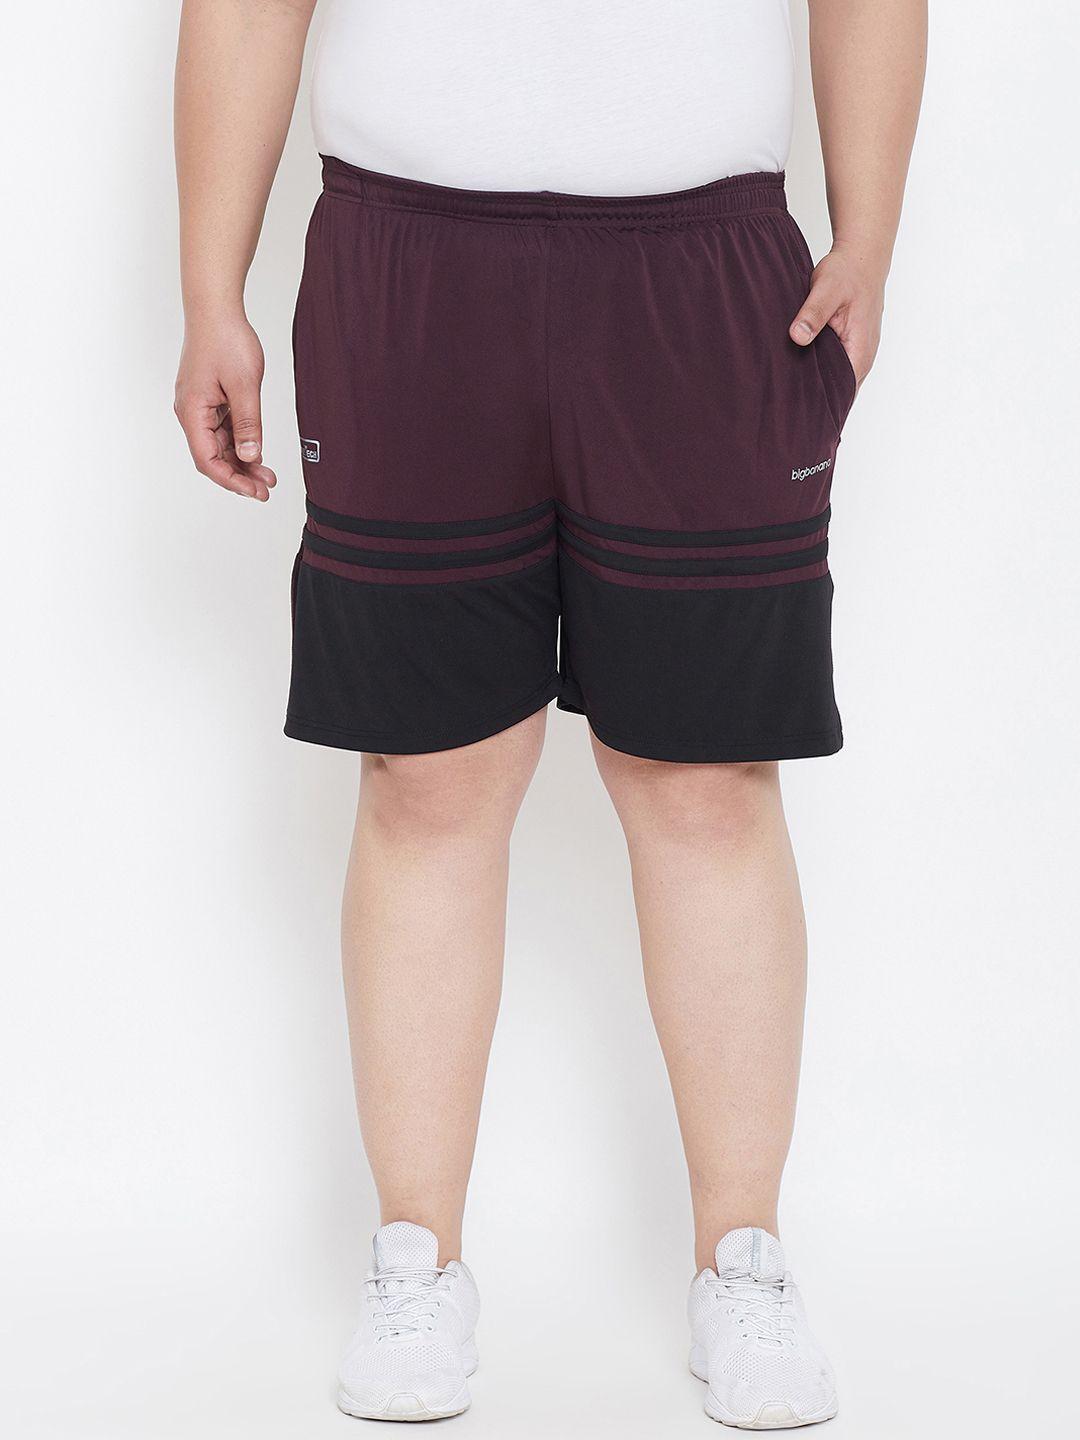 bigbanana plus size men maroon solid regular shorts